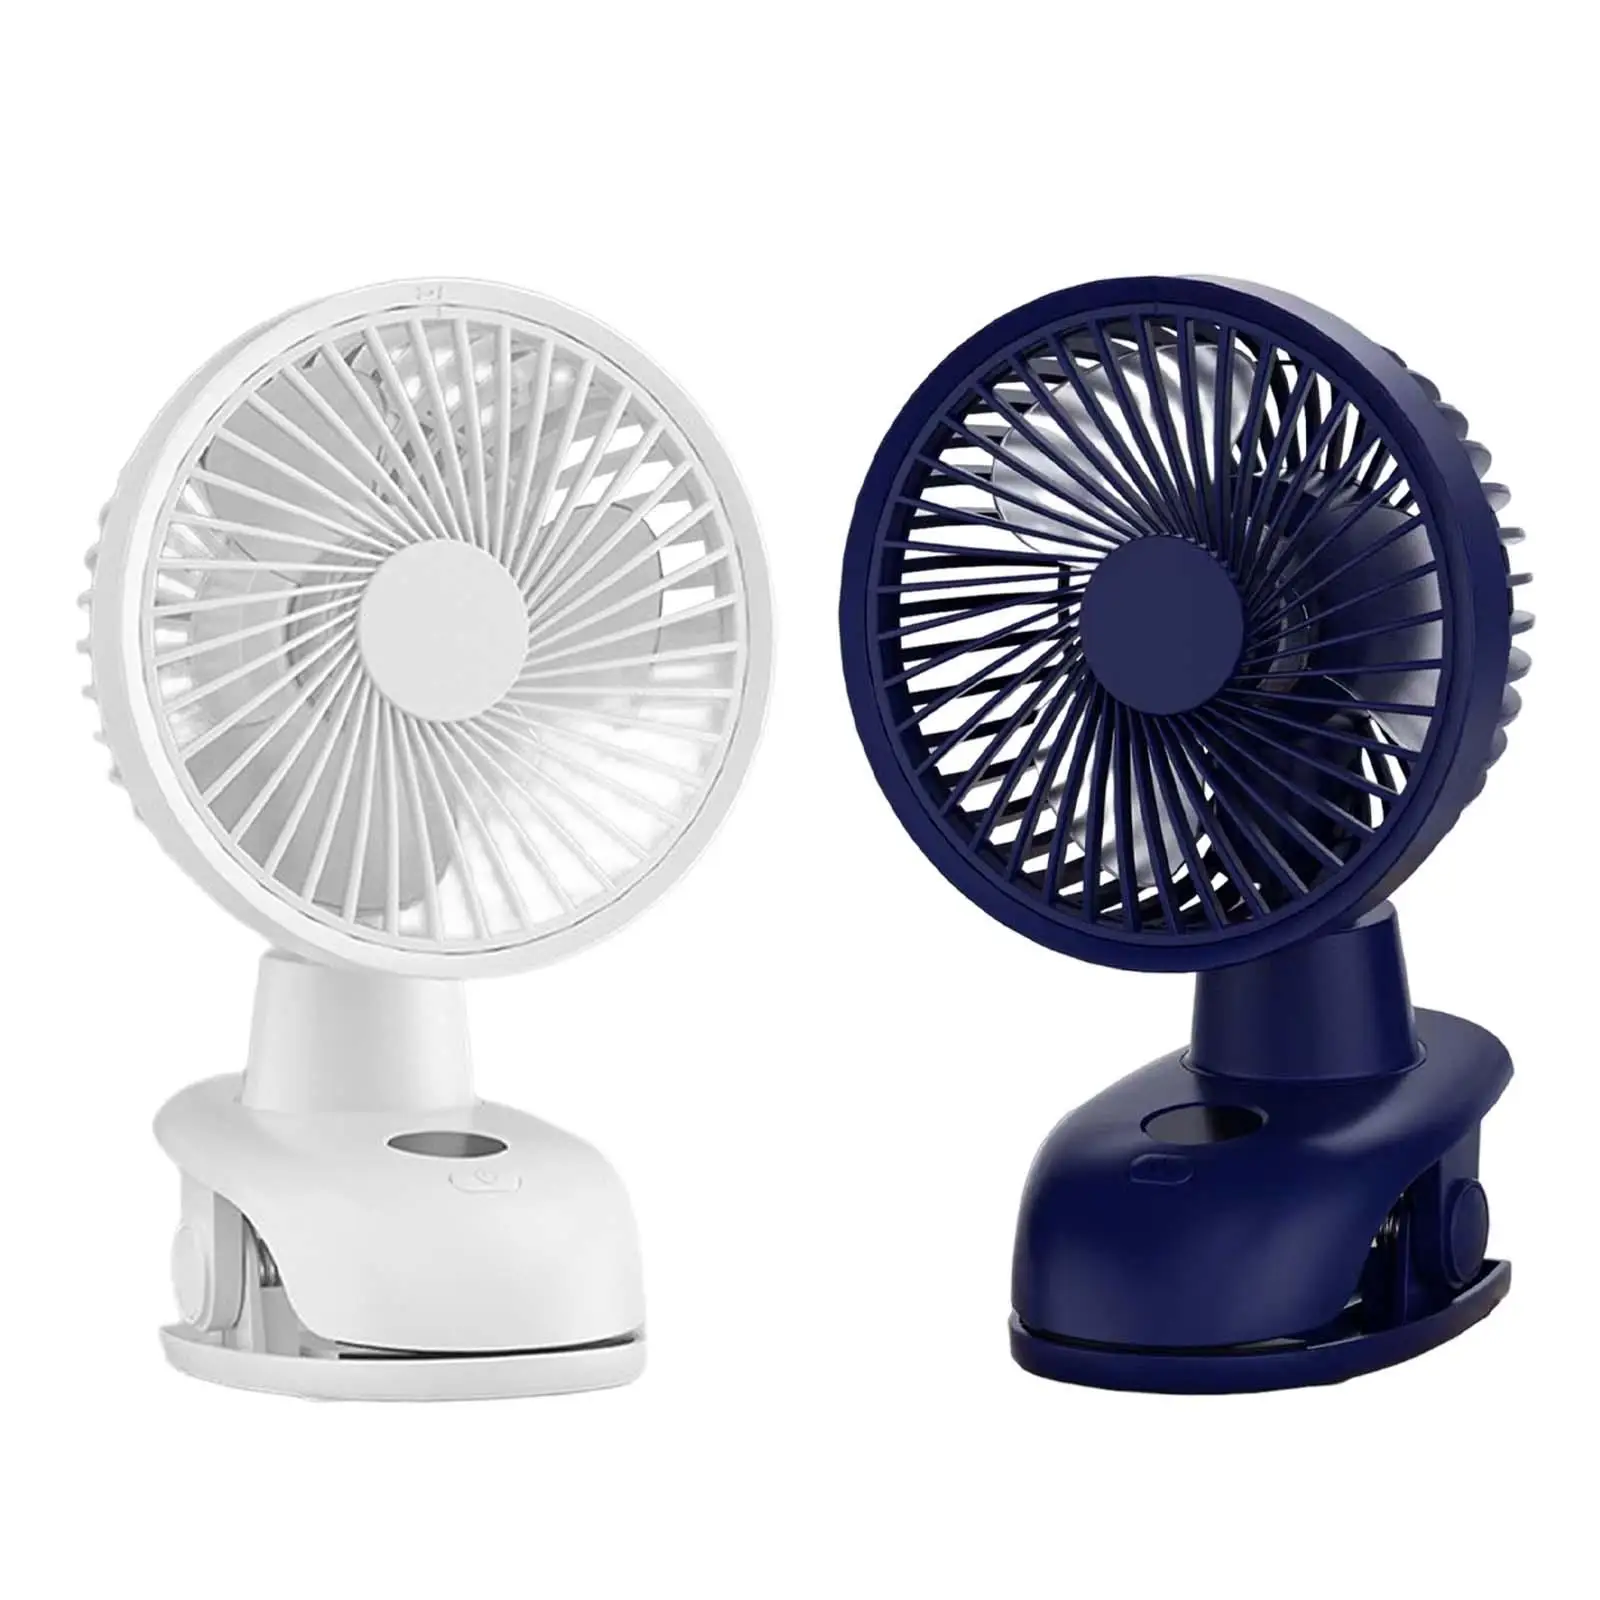 Portable Clip Fan Rechargeable LED Display 4 Speeds Quiet USB Desk Fan Table Fan Auto Oscillating Fan for Camping Bedroom